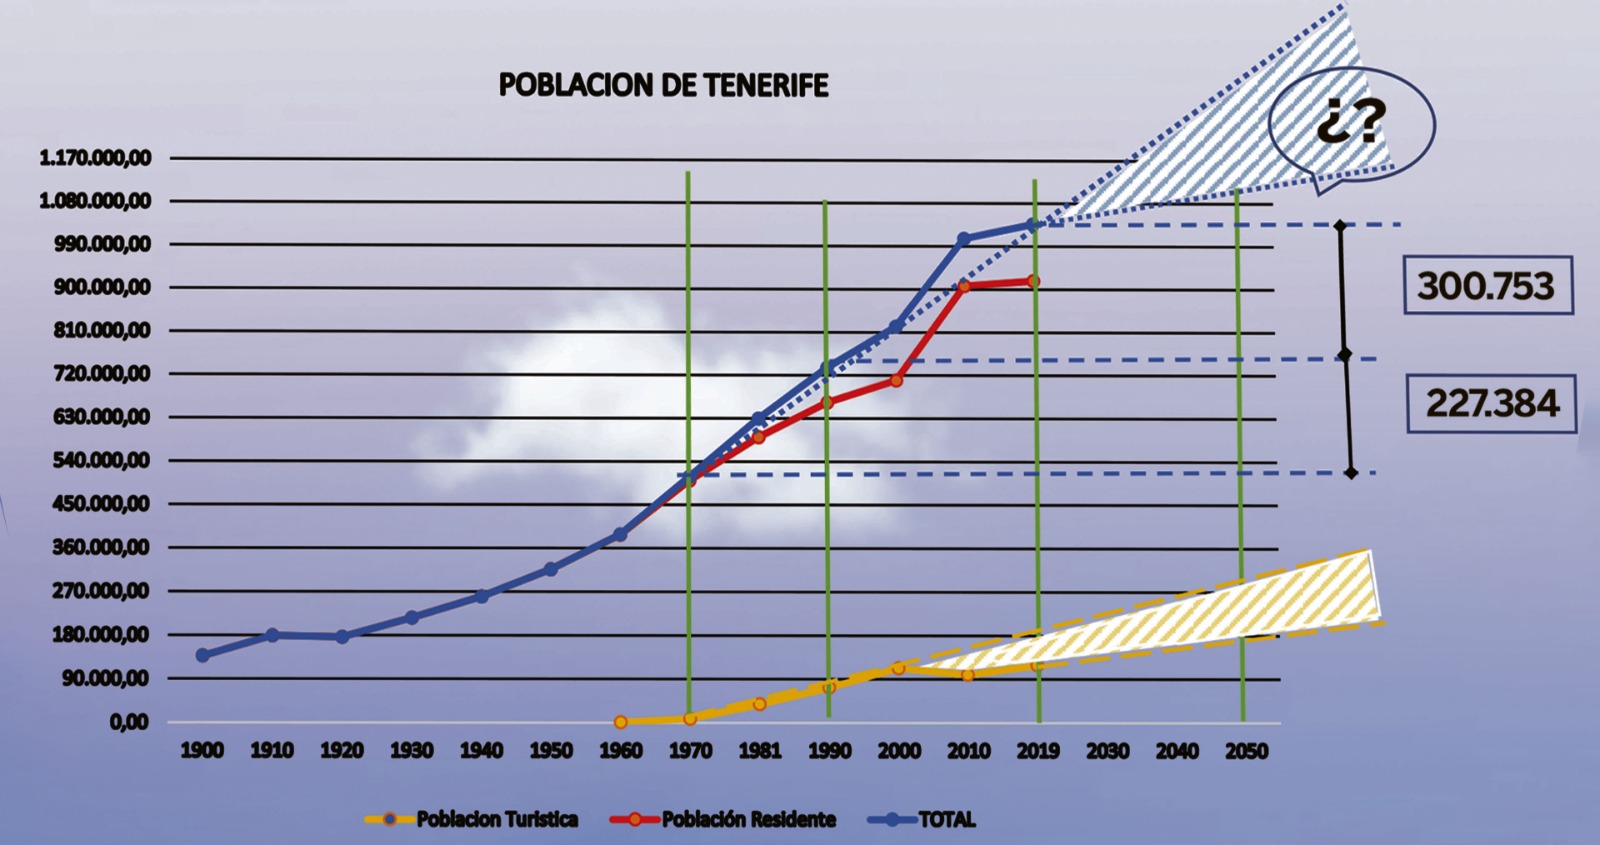 Tenerife has more population density than Mallorca or Japan Tenerife